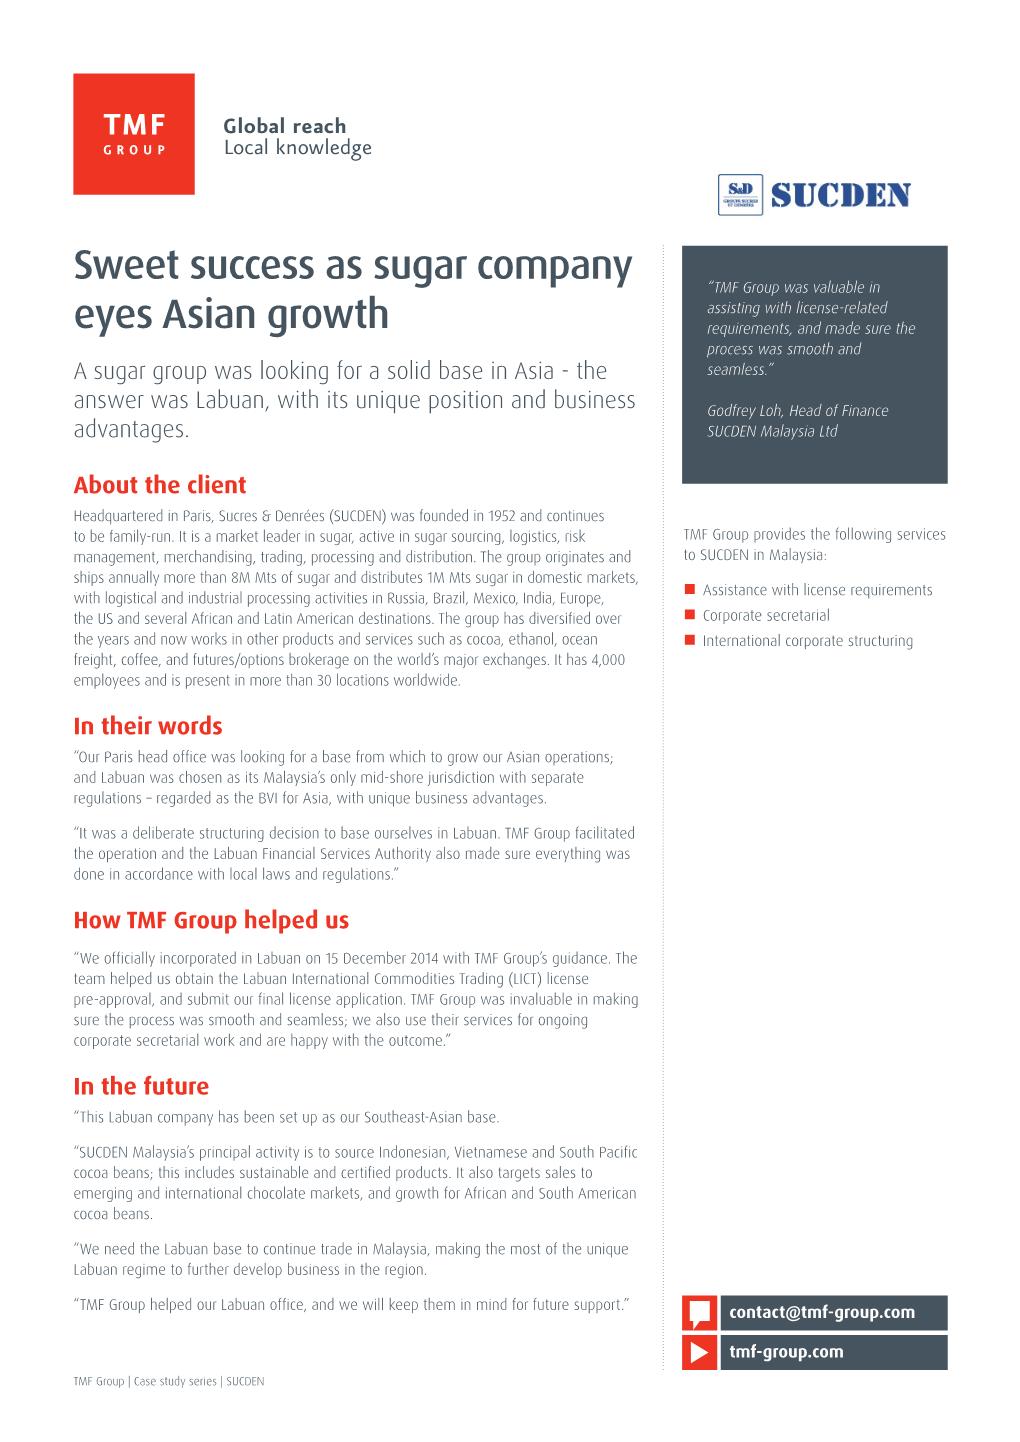 Sweet Success As Sugar Company Eyes Asian Growth